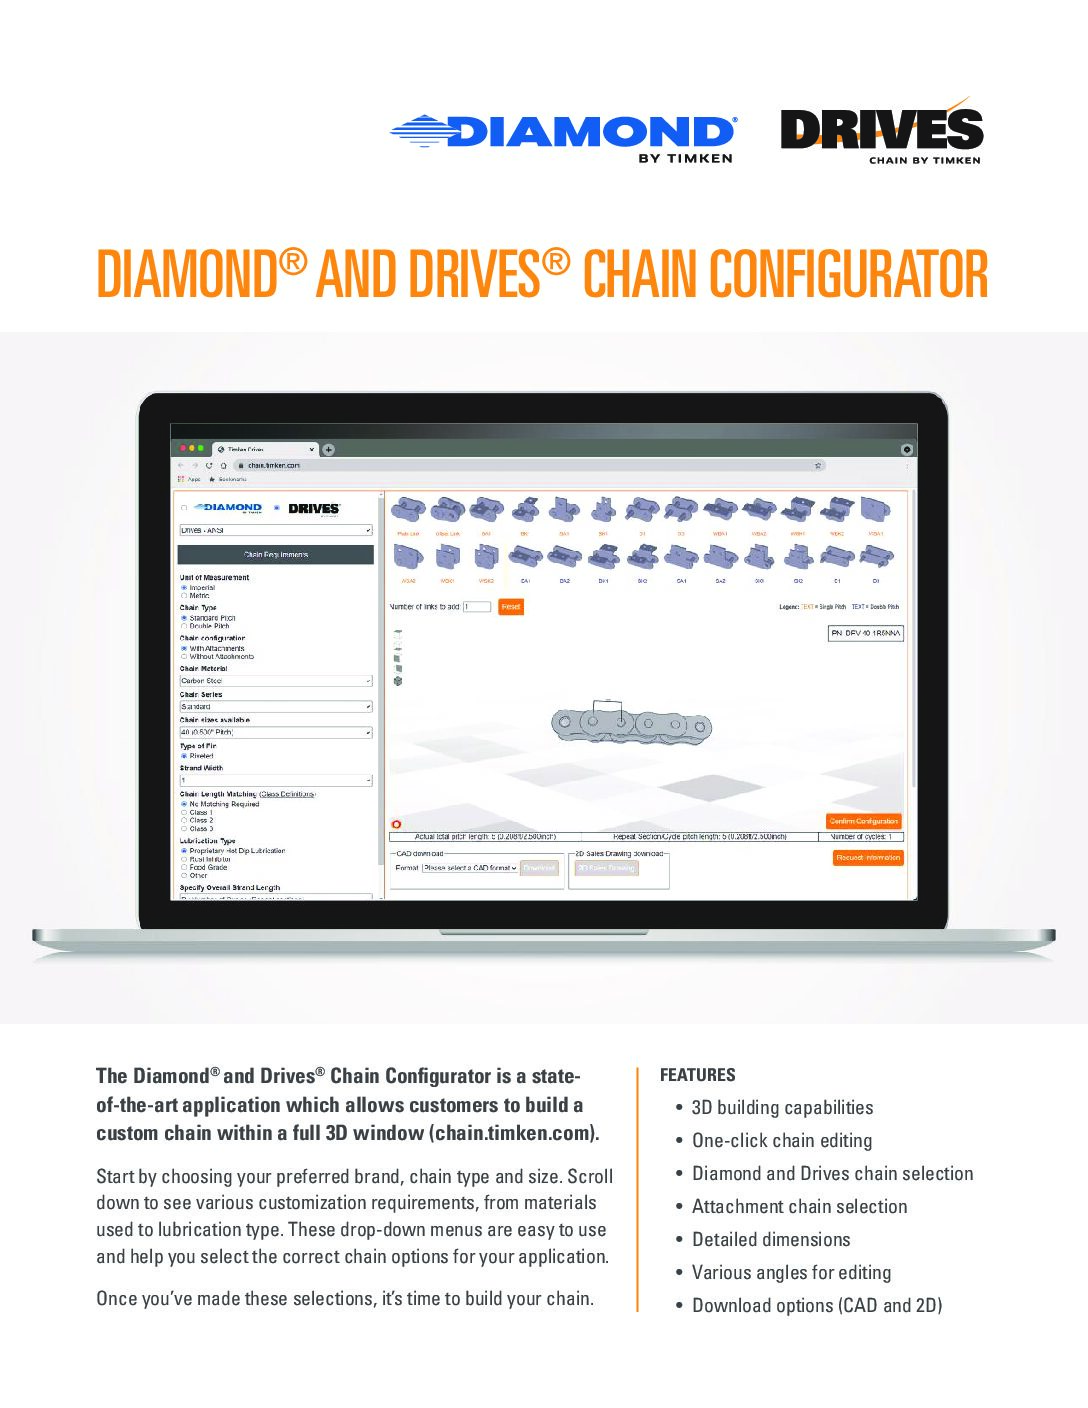 Diamond and Drives Chain Configurator Brochure